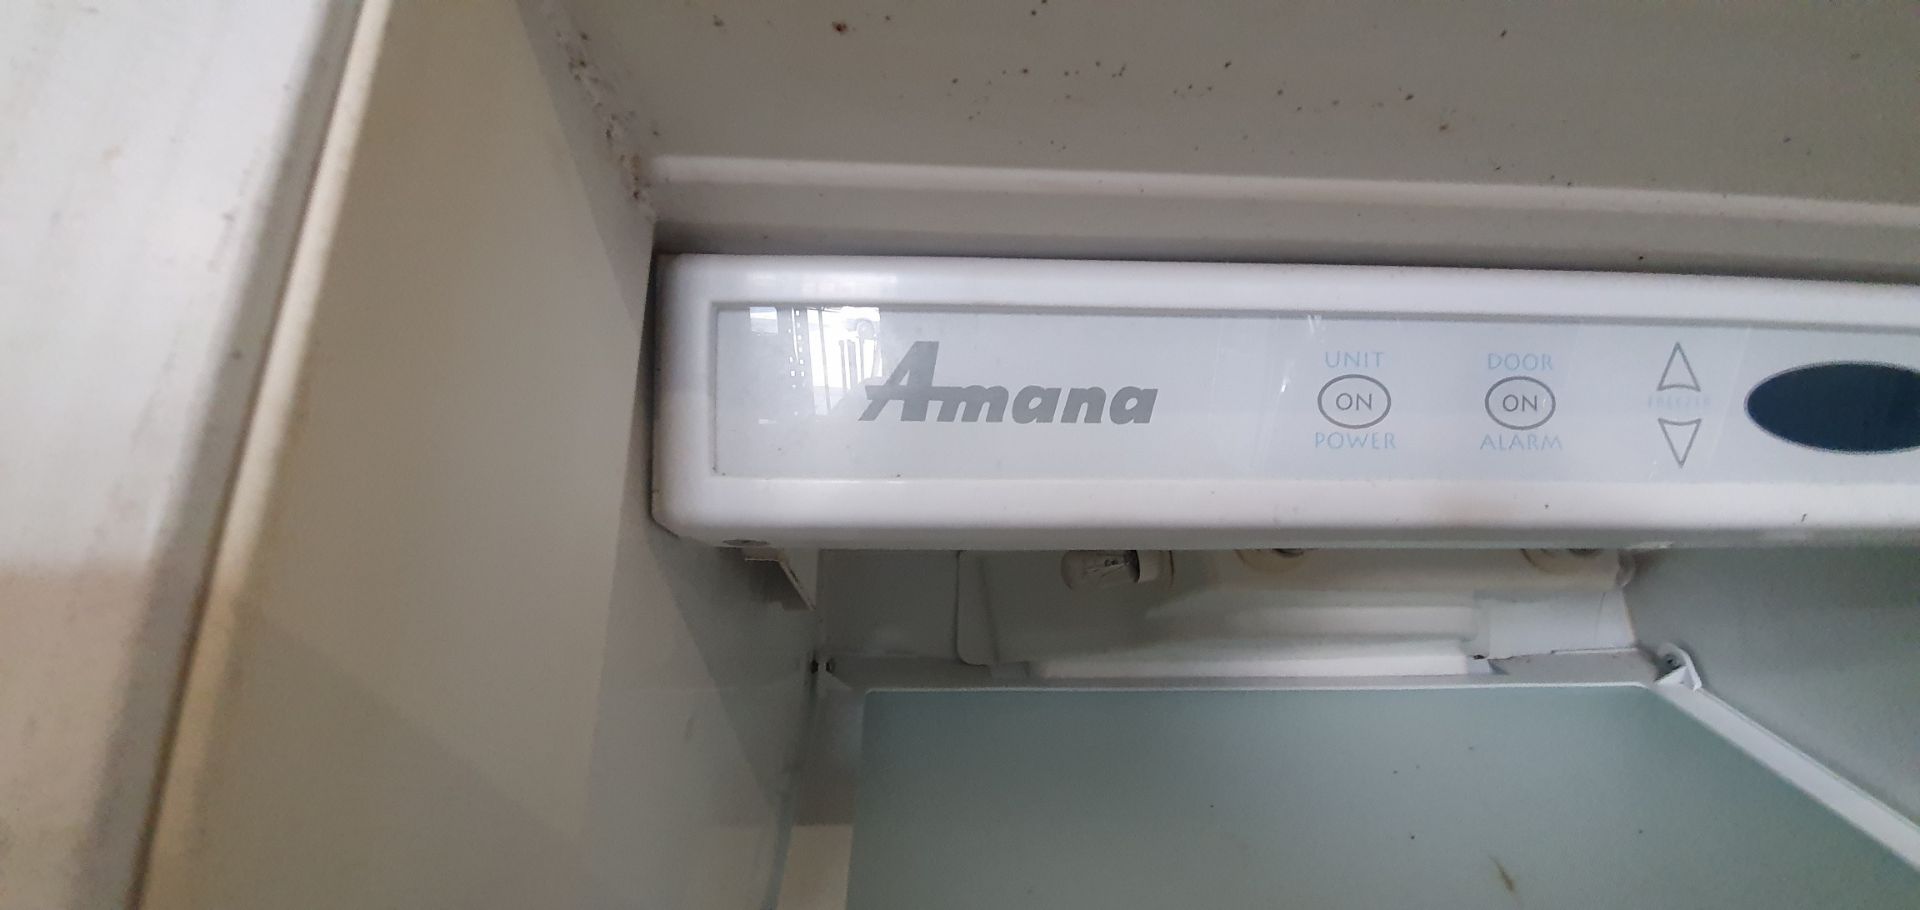 S/S Amana upright domestic fridge/freezer 1250w x 650d x 2100h - at Cornwall Street, Hull, HU8 8AF - Image 5 of 5